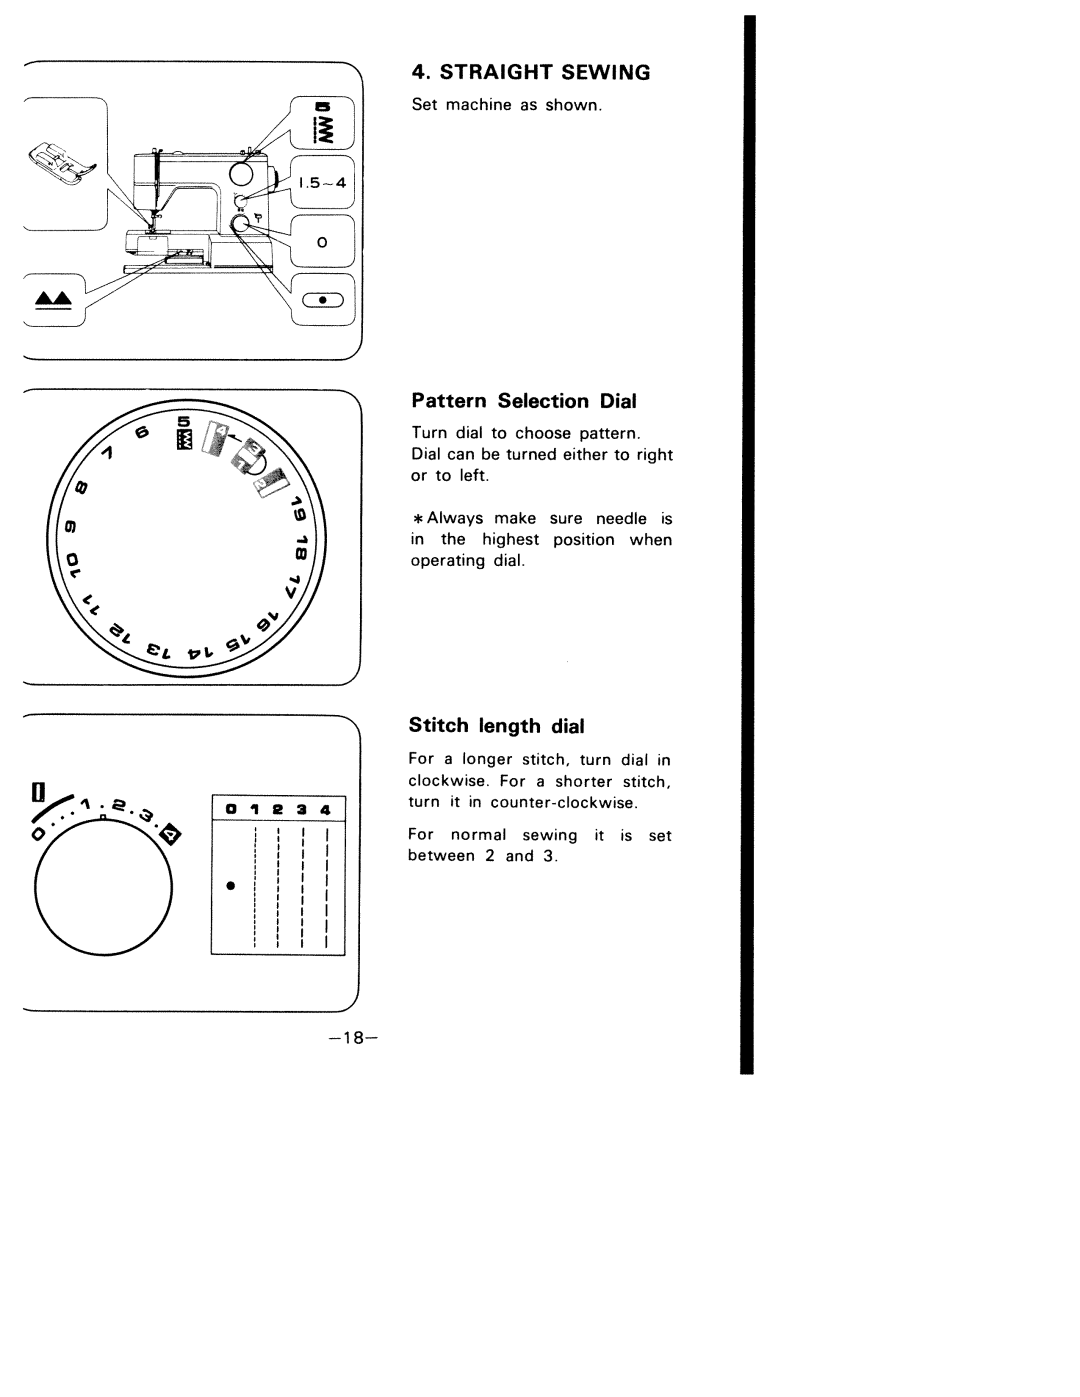 White 1927 manual O134, Stitch length dial, Pattern Selection Dial 